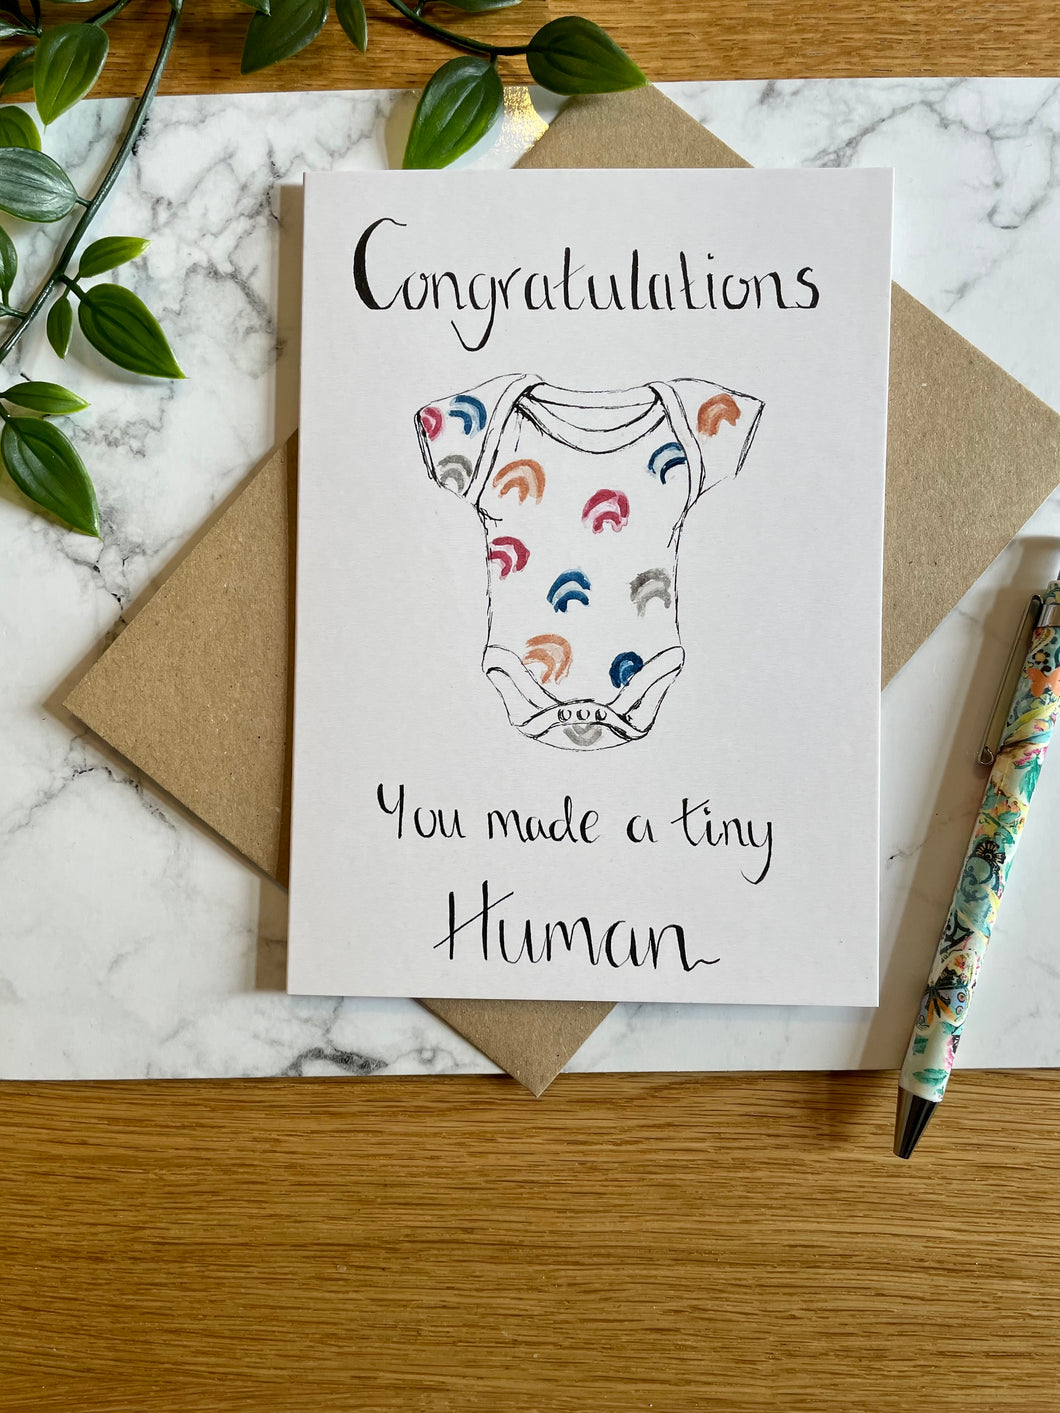 Congratulations you made a tiny Human! (Rainbows)